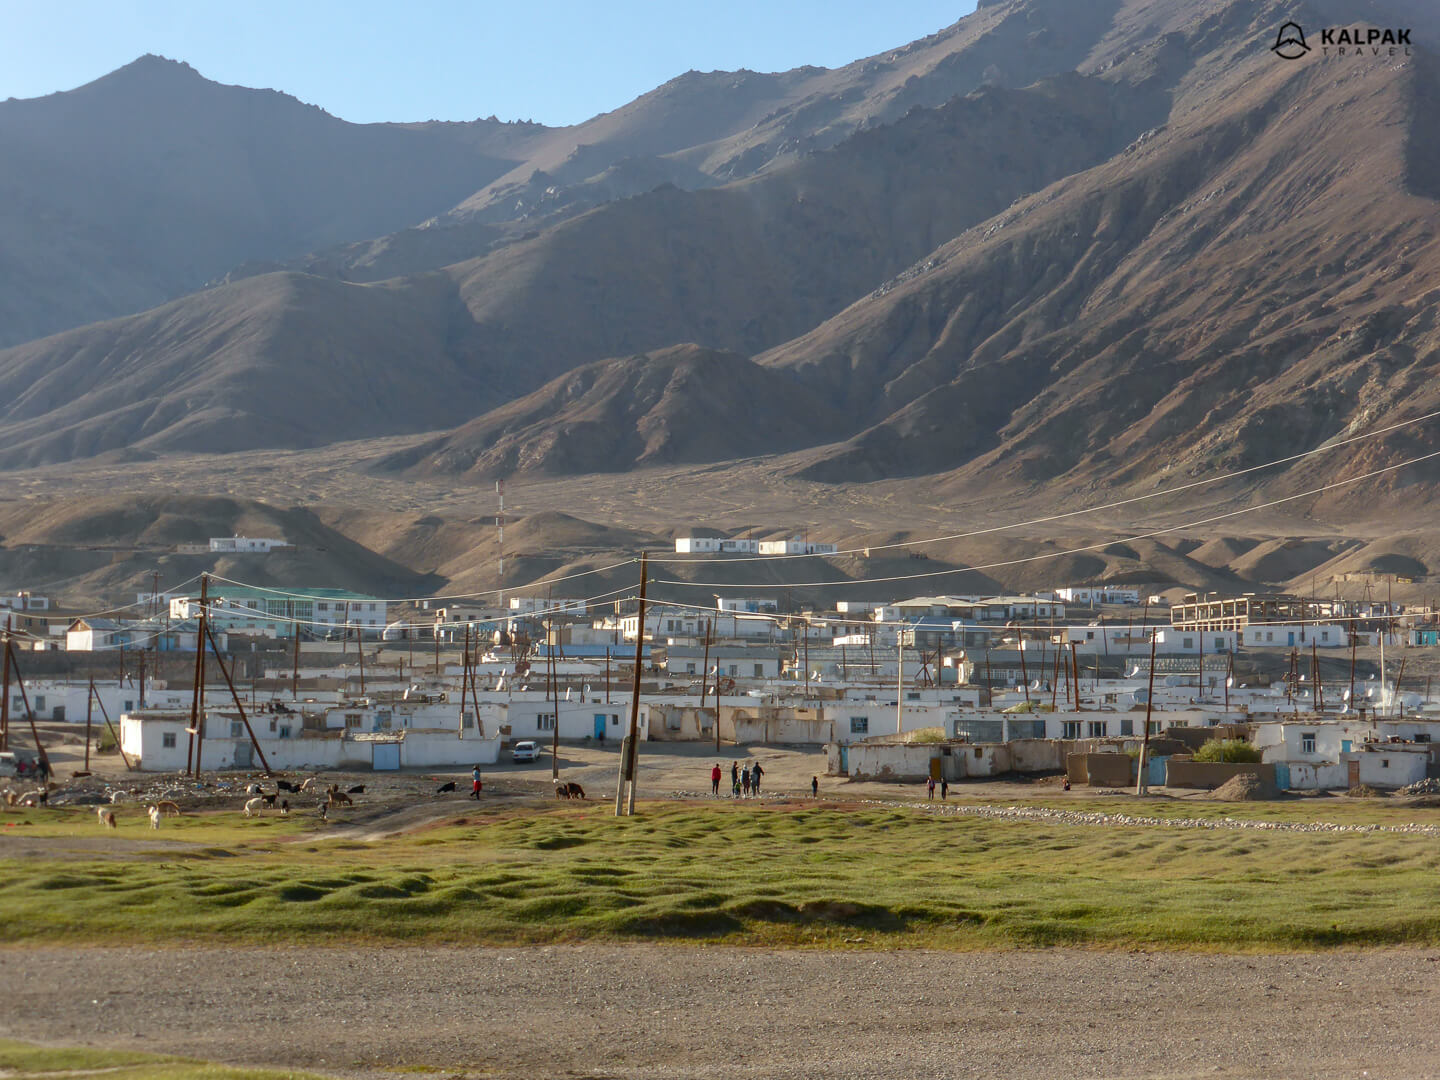 Murghab is a Kyrgyz city on Pamir Highway